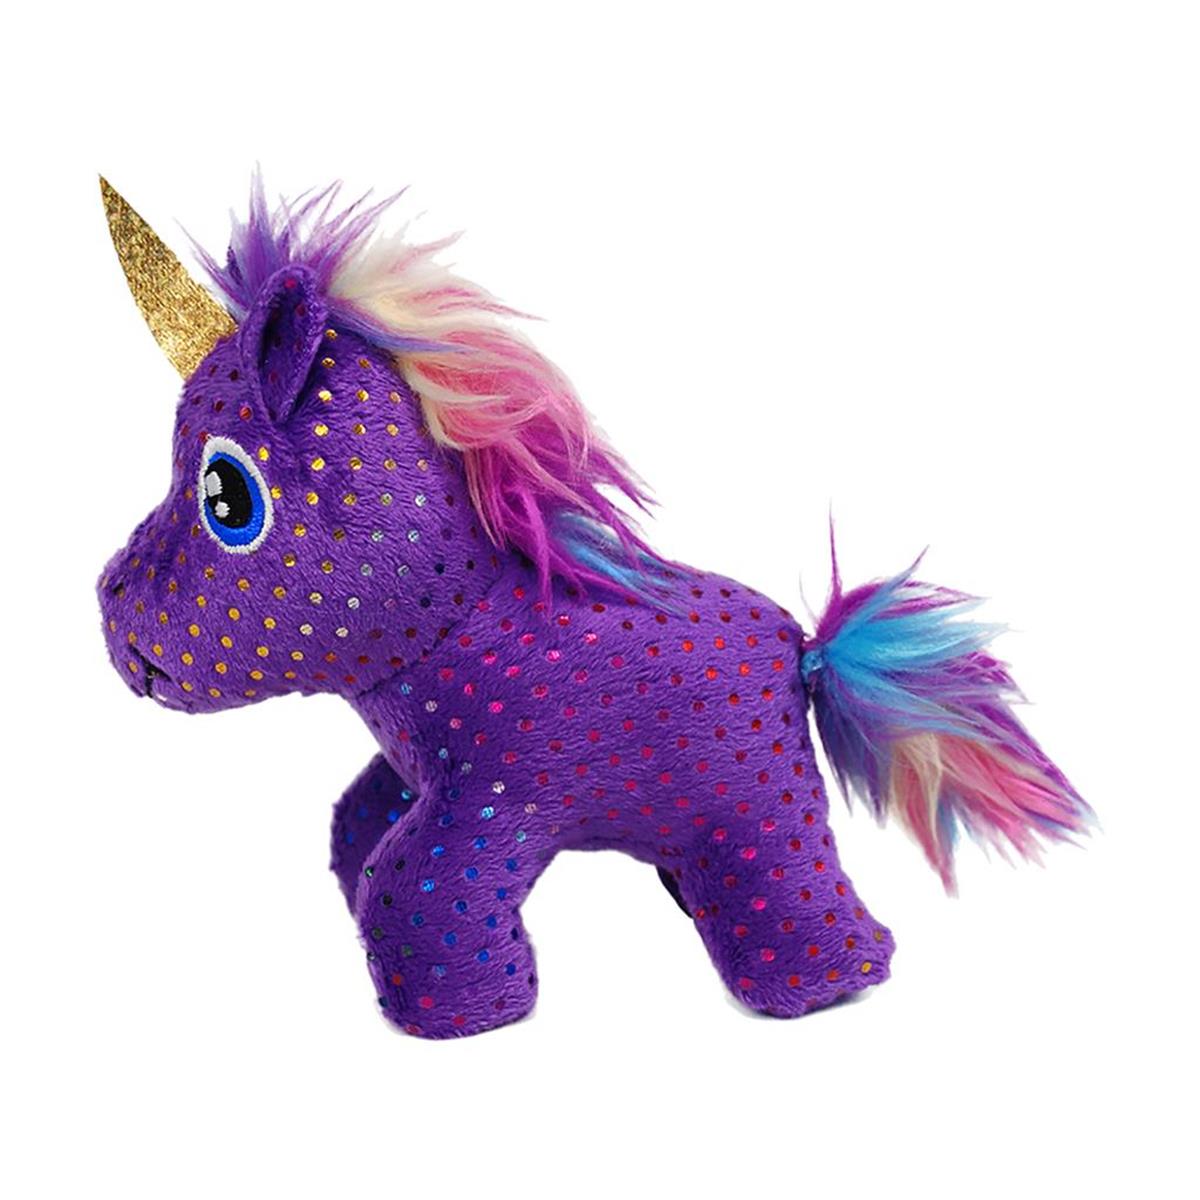 Kc45913 Enchanted Buzzy Unicorn Pets Toy